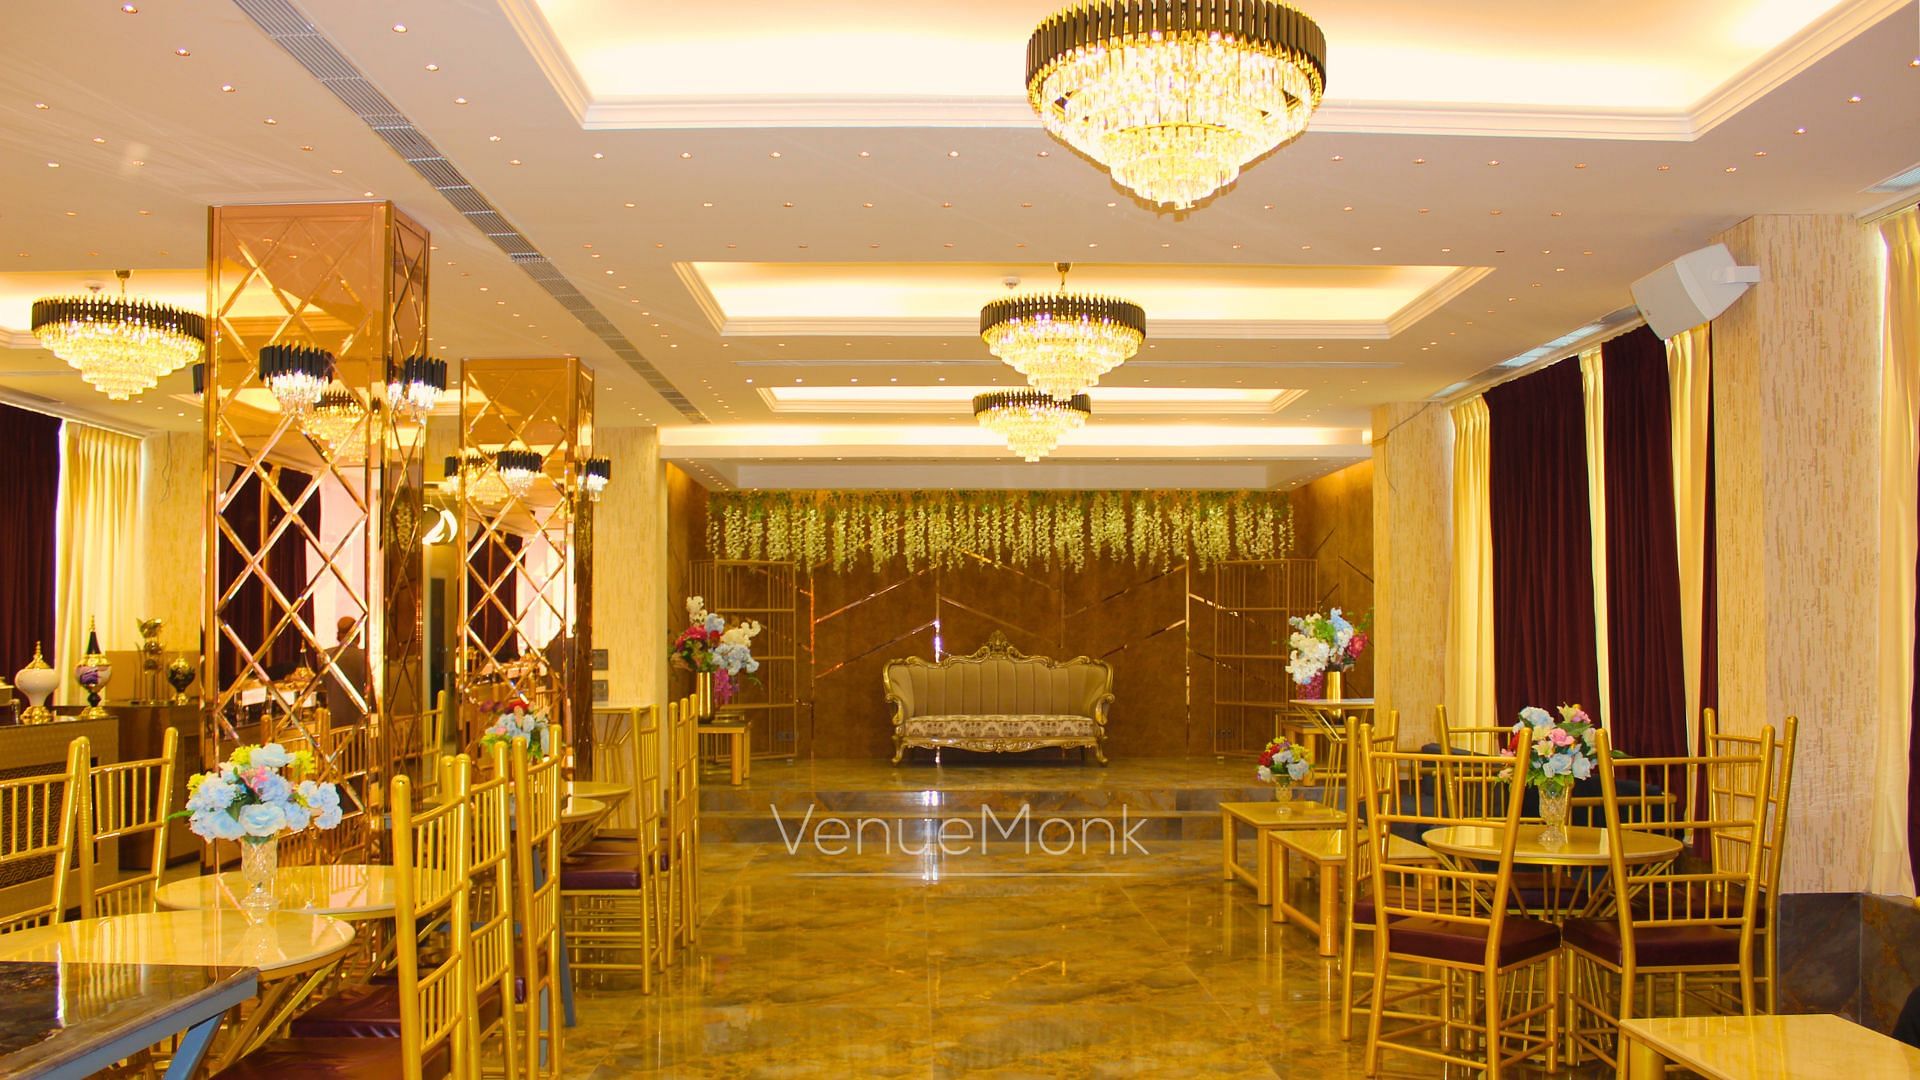 Wynnd Hotel Banquet in Greater Noida, Noida